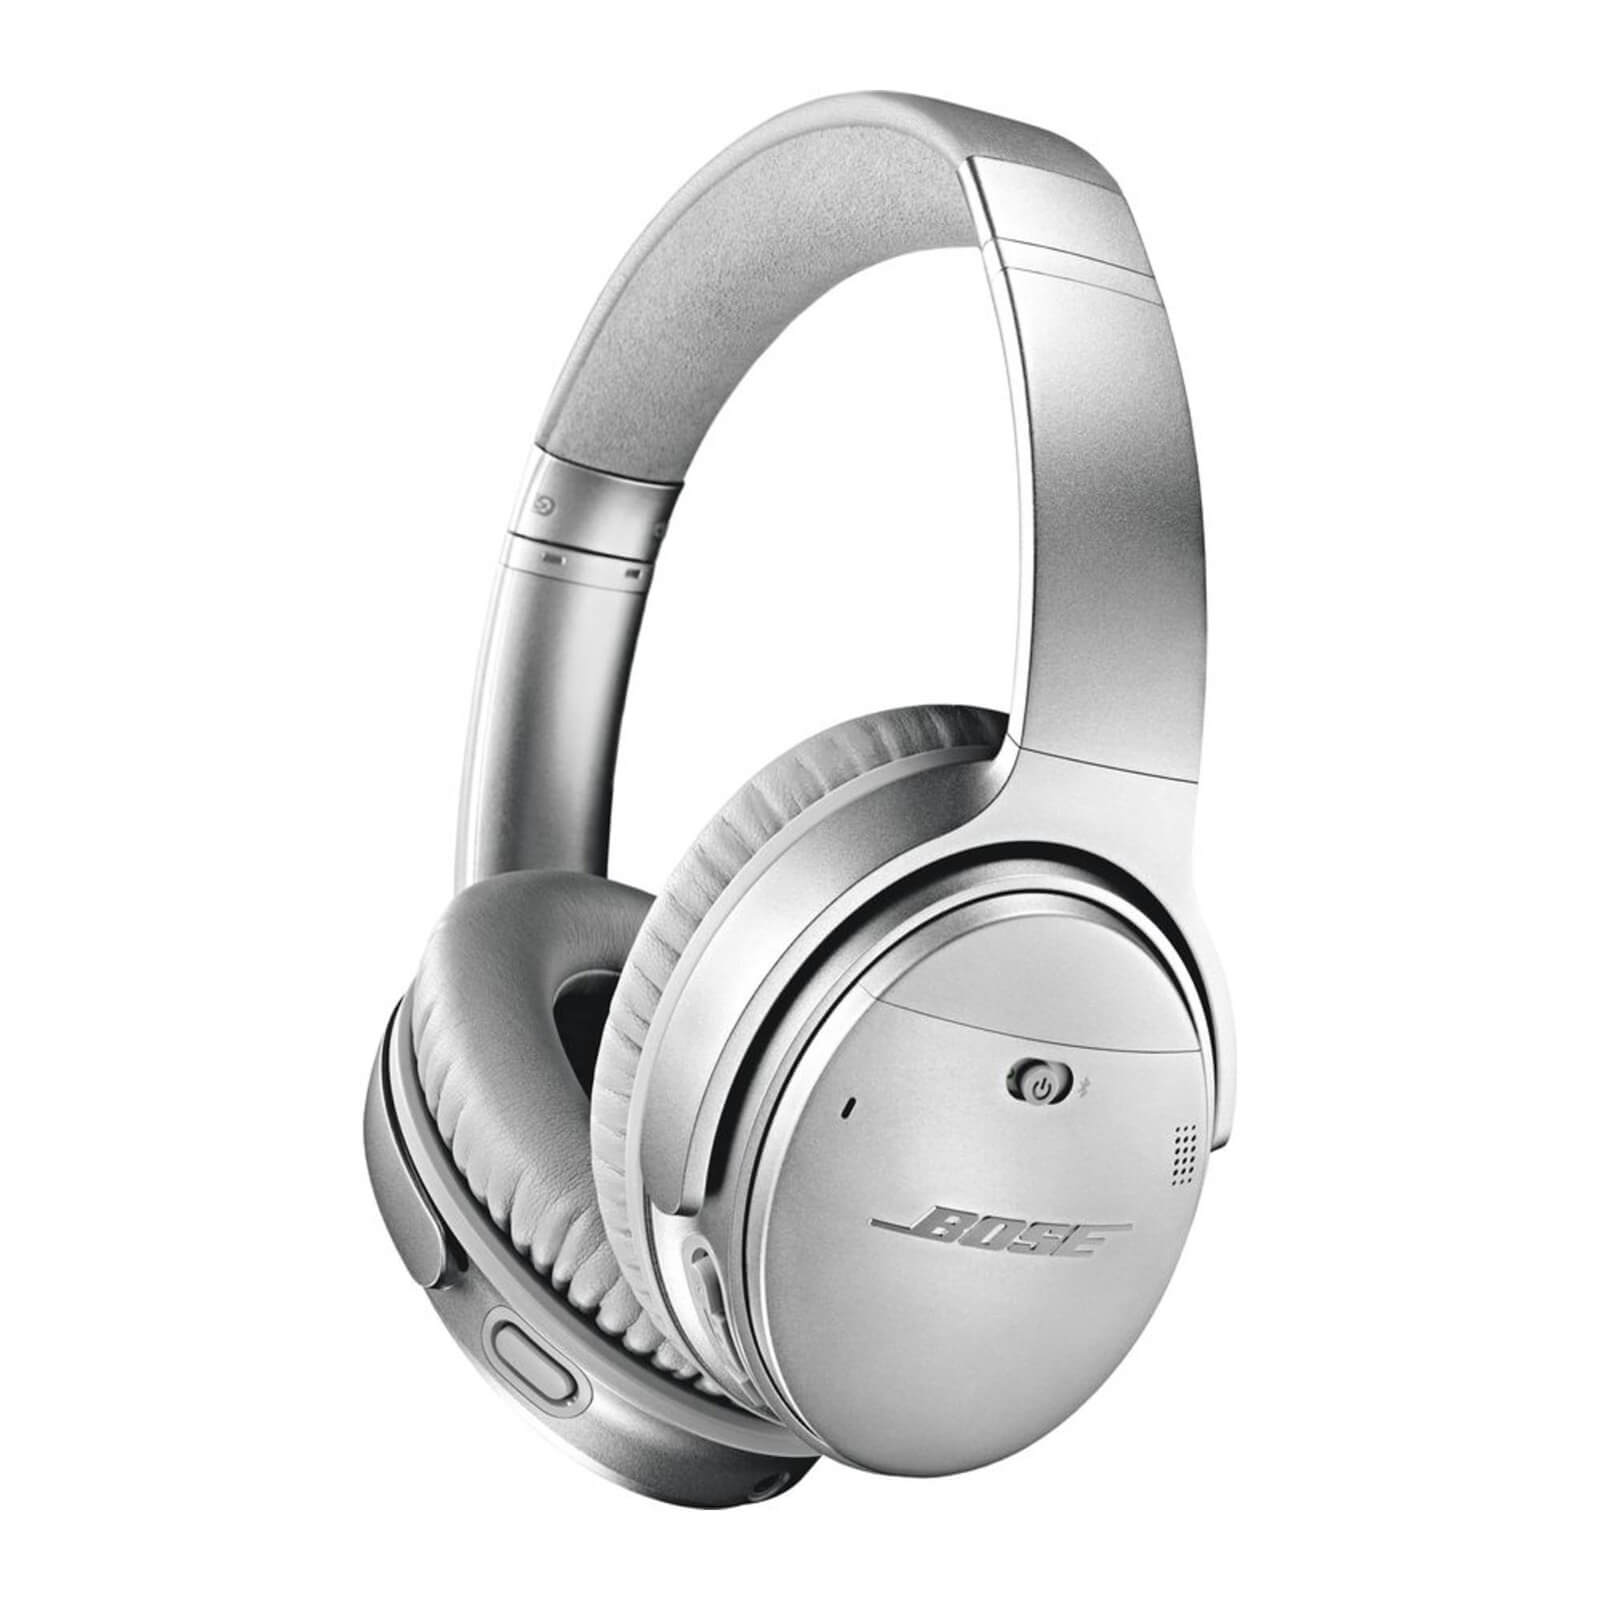 Bose QuietComfort 35 (Series II) Wireless Headphones, Noise Cancelling with Alexa Built-In - Silver